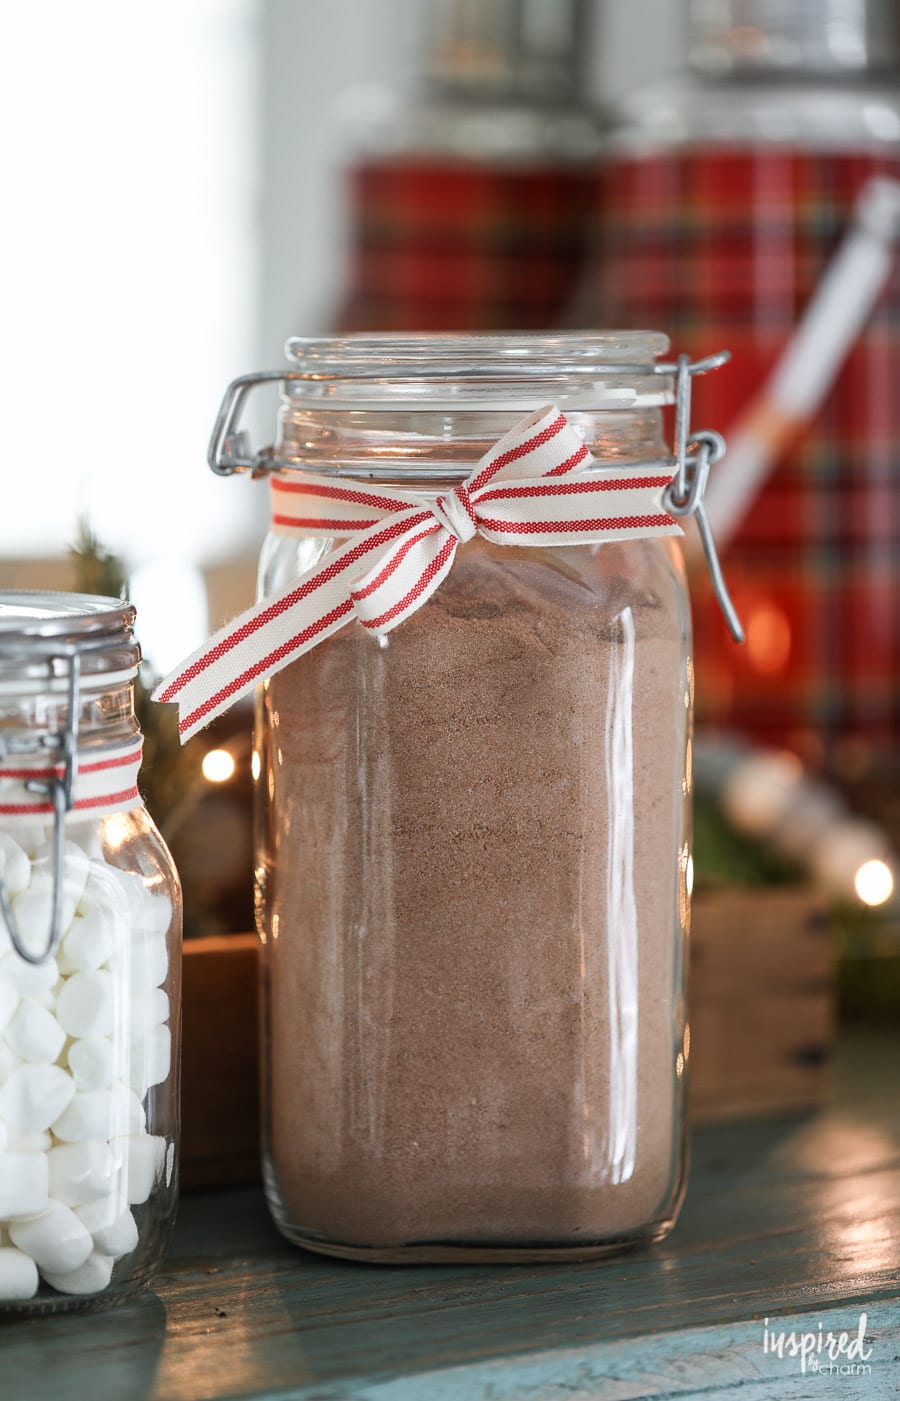 The BEST recipe for delicious Homemade Hot Cocoa Mix #hotcocoa #hotchocolate #cocoa #recipe #holiday #christmas #gift #handmade